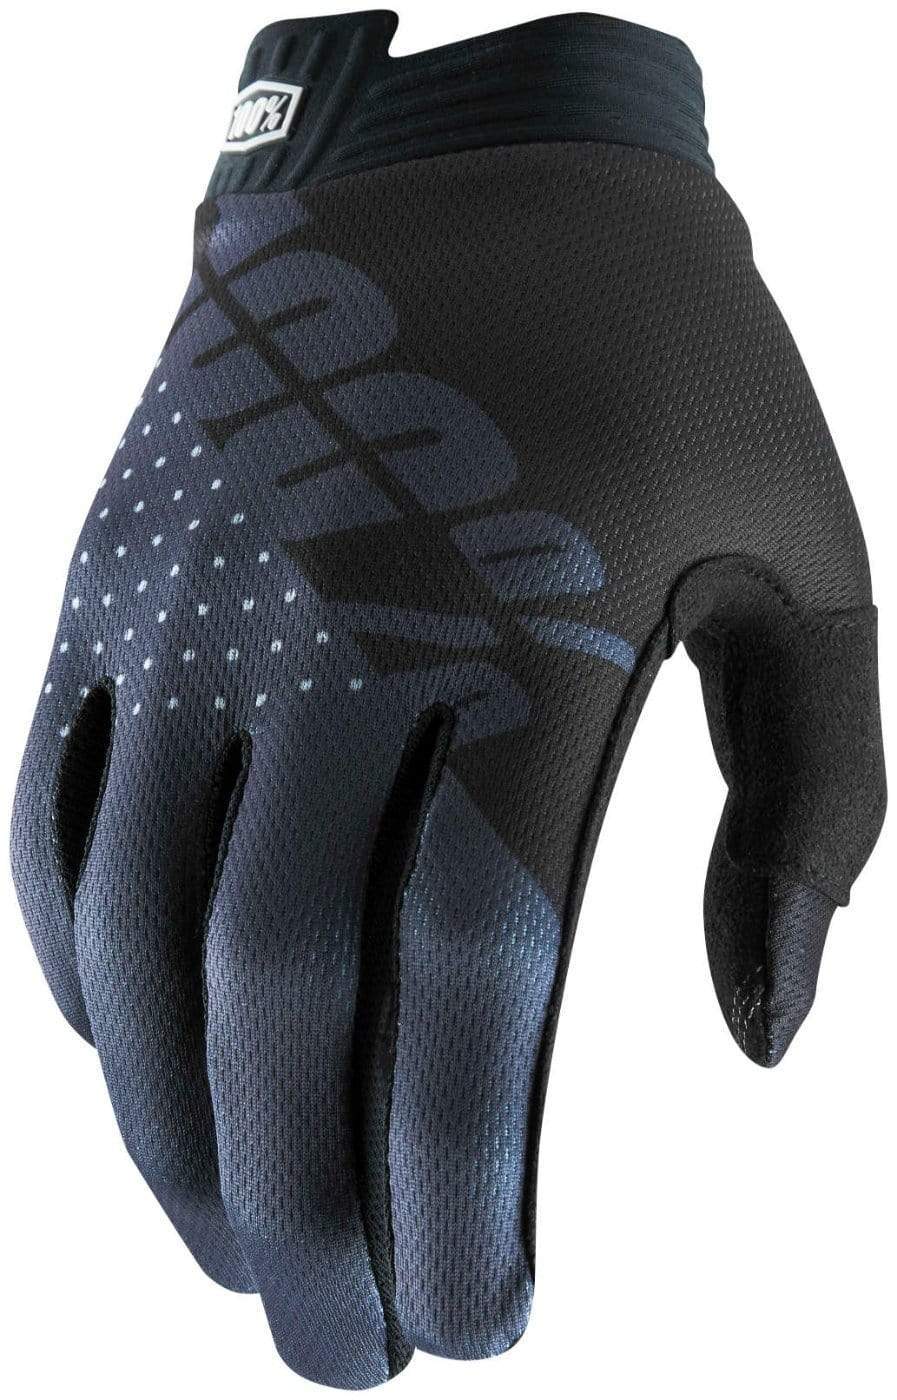 100% Apparel 100% Men's iTrack Gloves Black/Charcoal